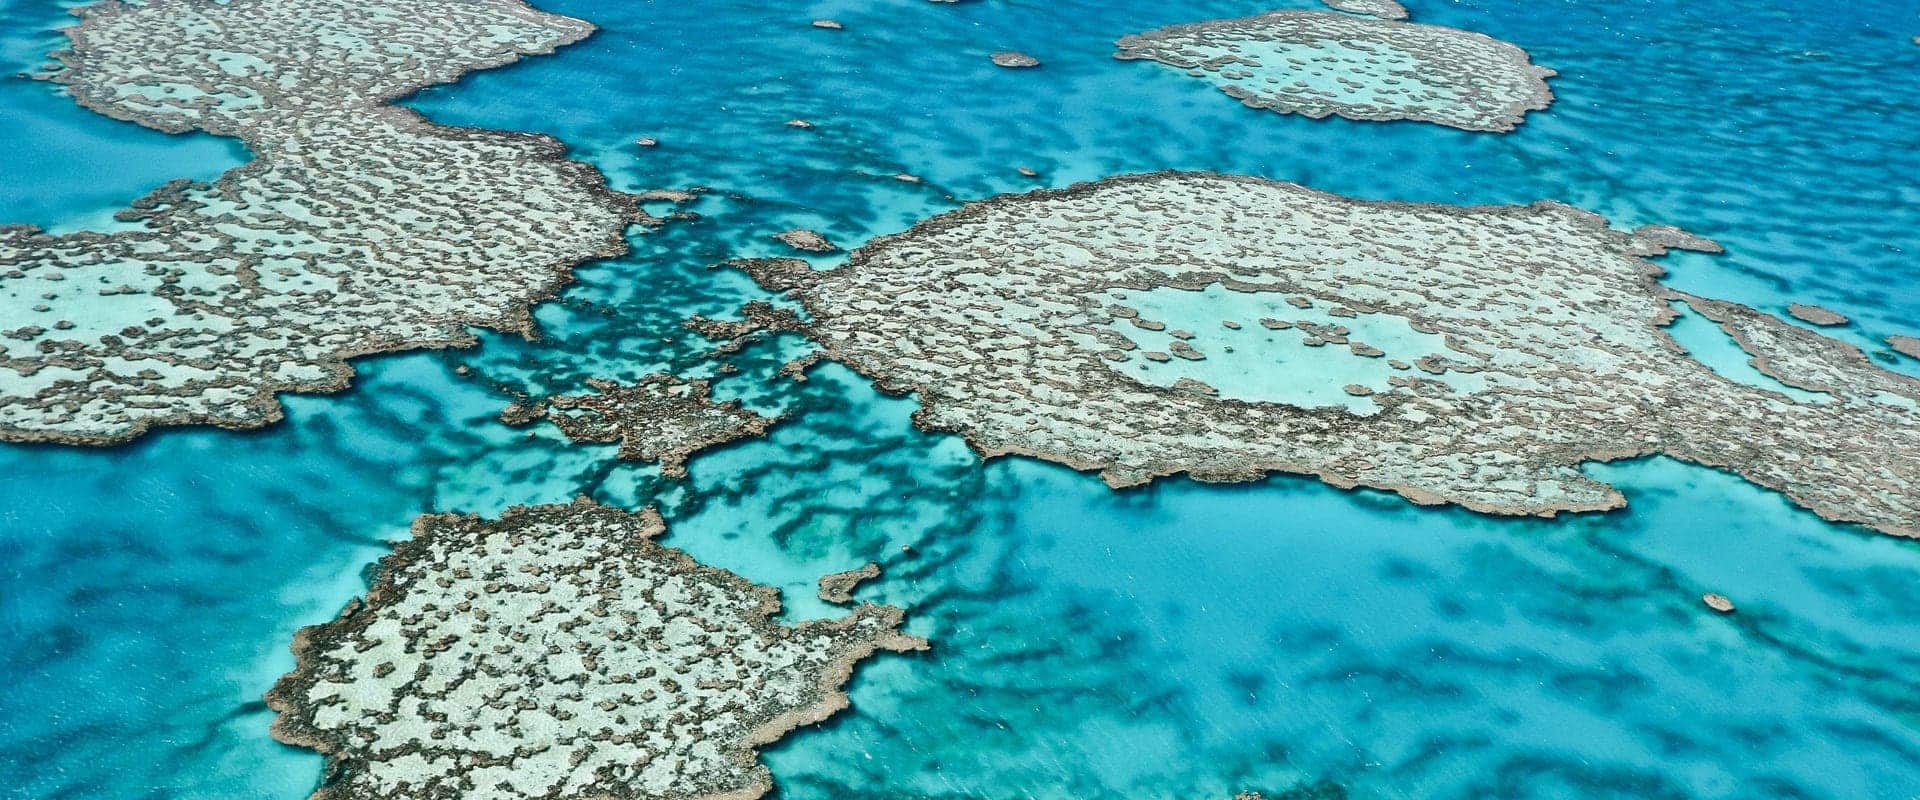 Liveaboard duiken in The Great Barrier Reef